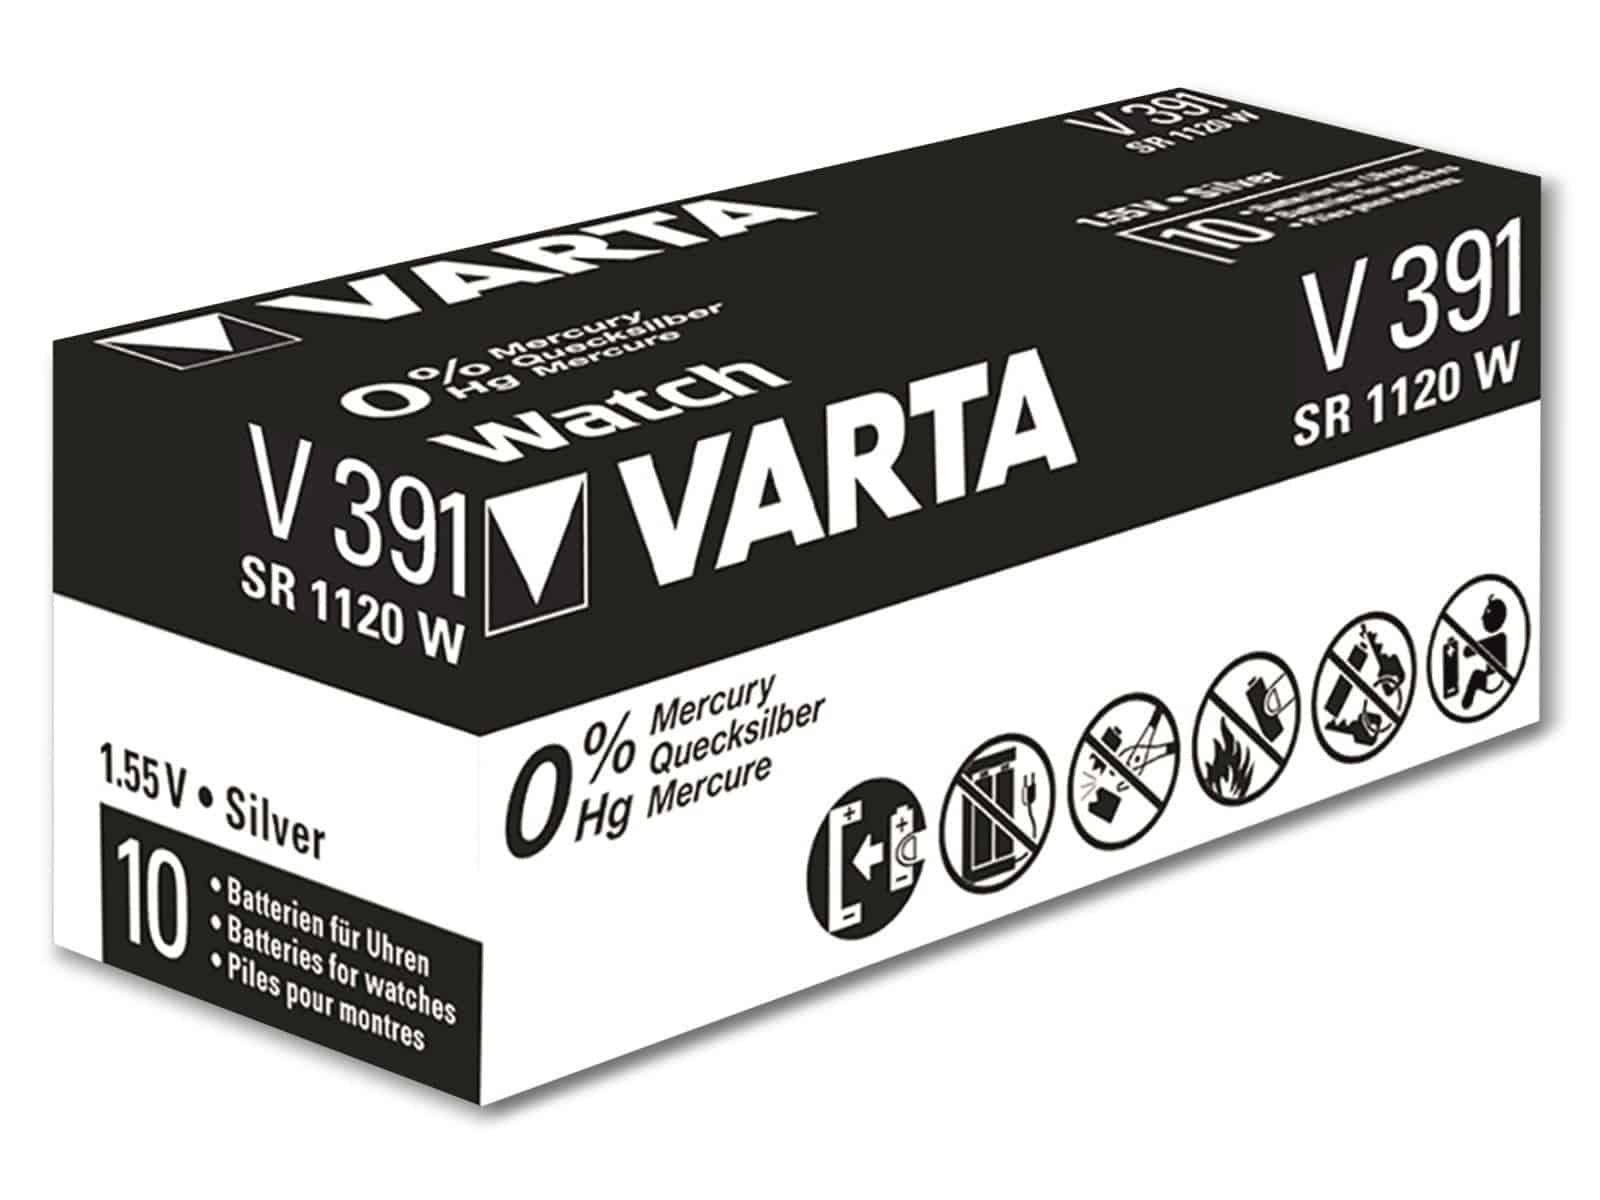 VARTA VARTA 391 Knopfzelle Knopfzelle Silver SR55, Oxide, 1.55V